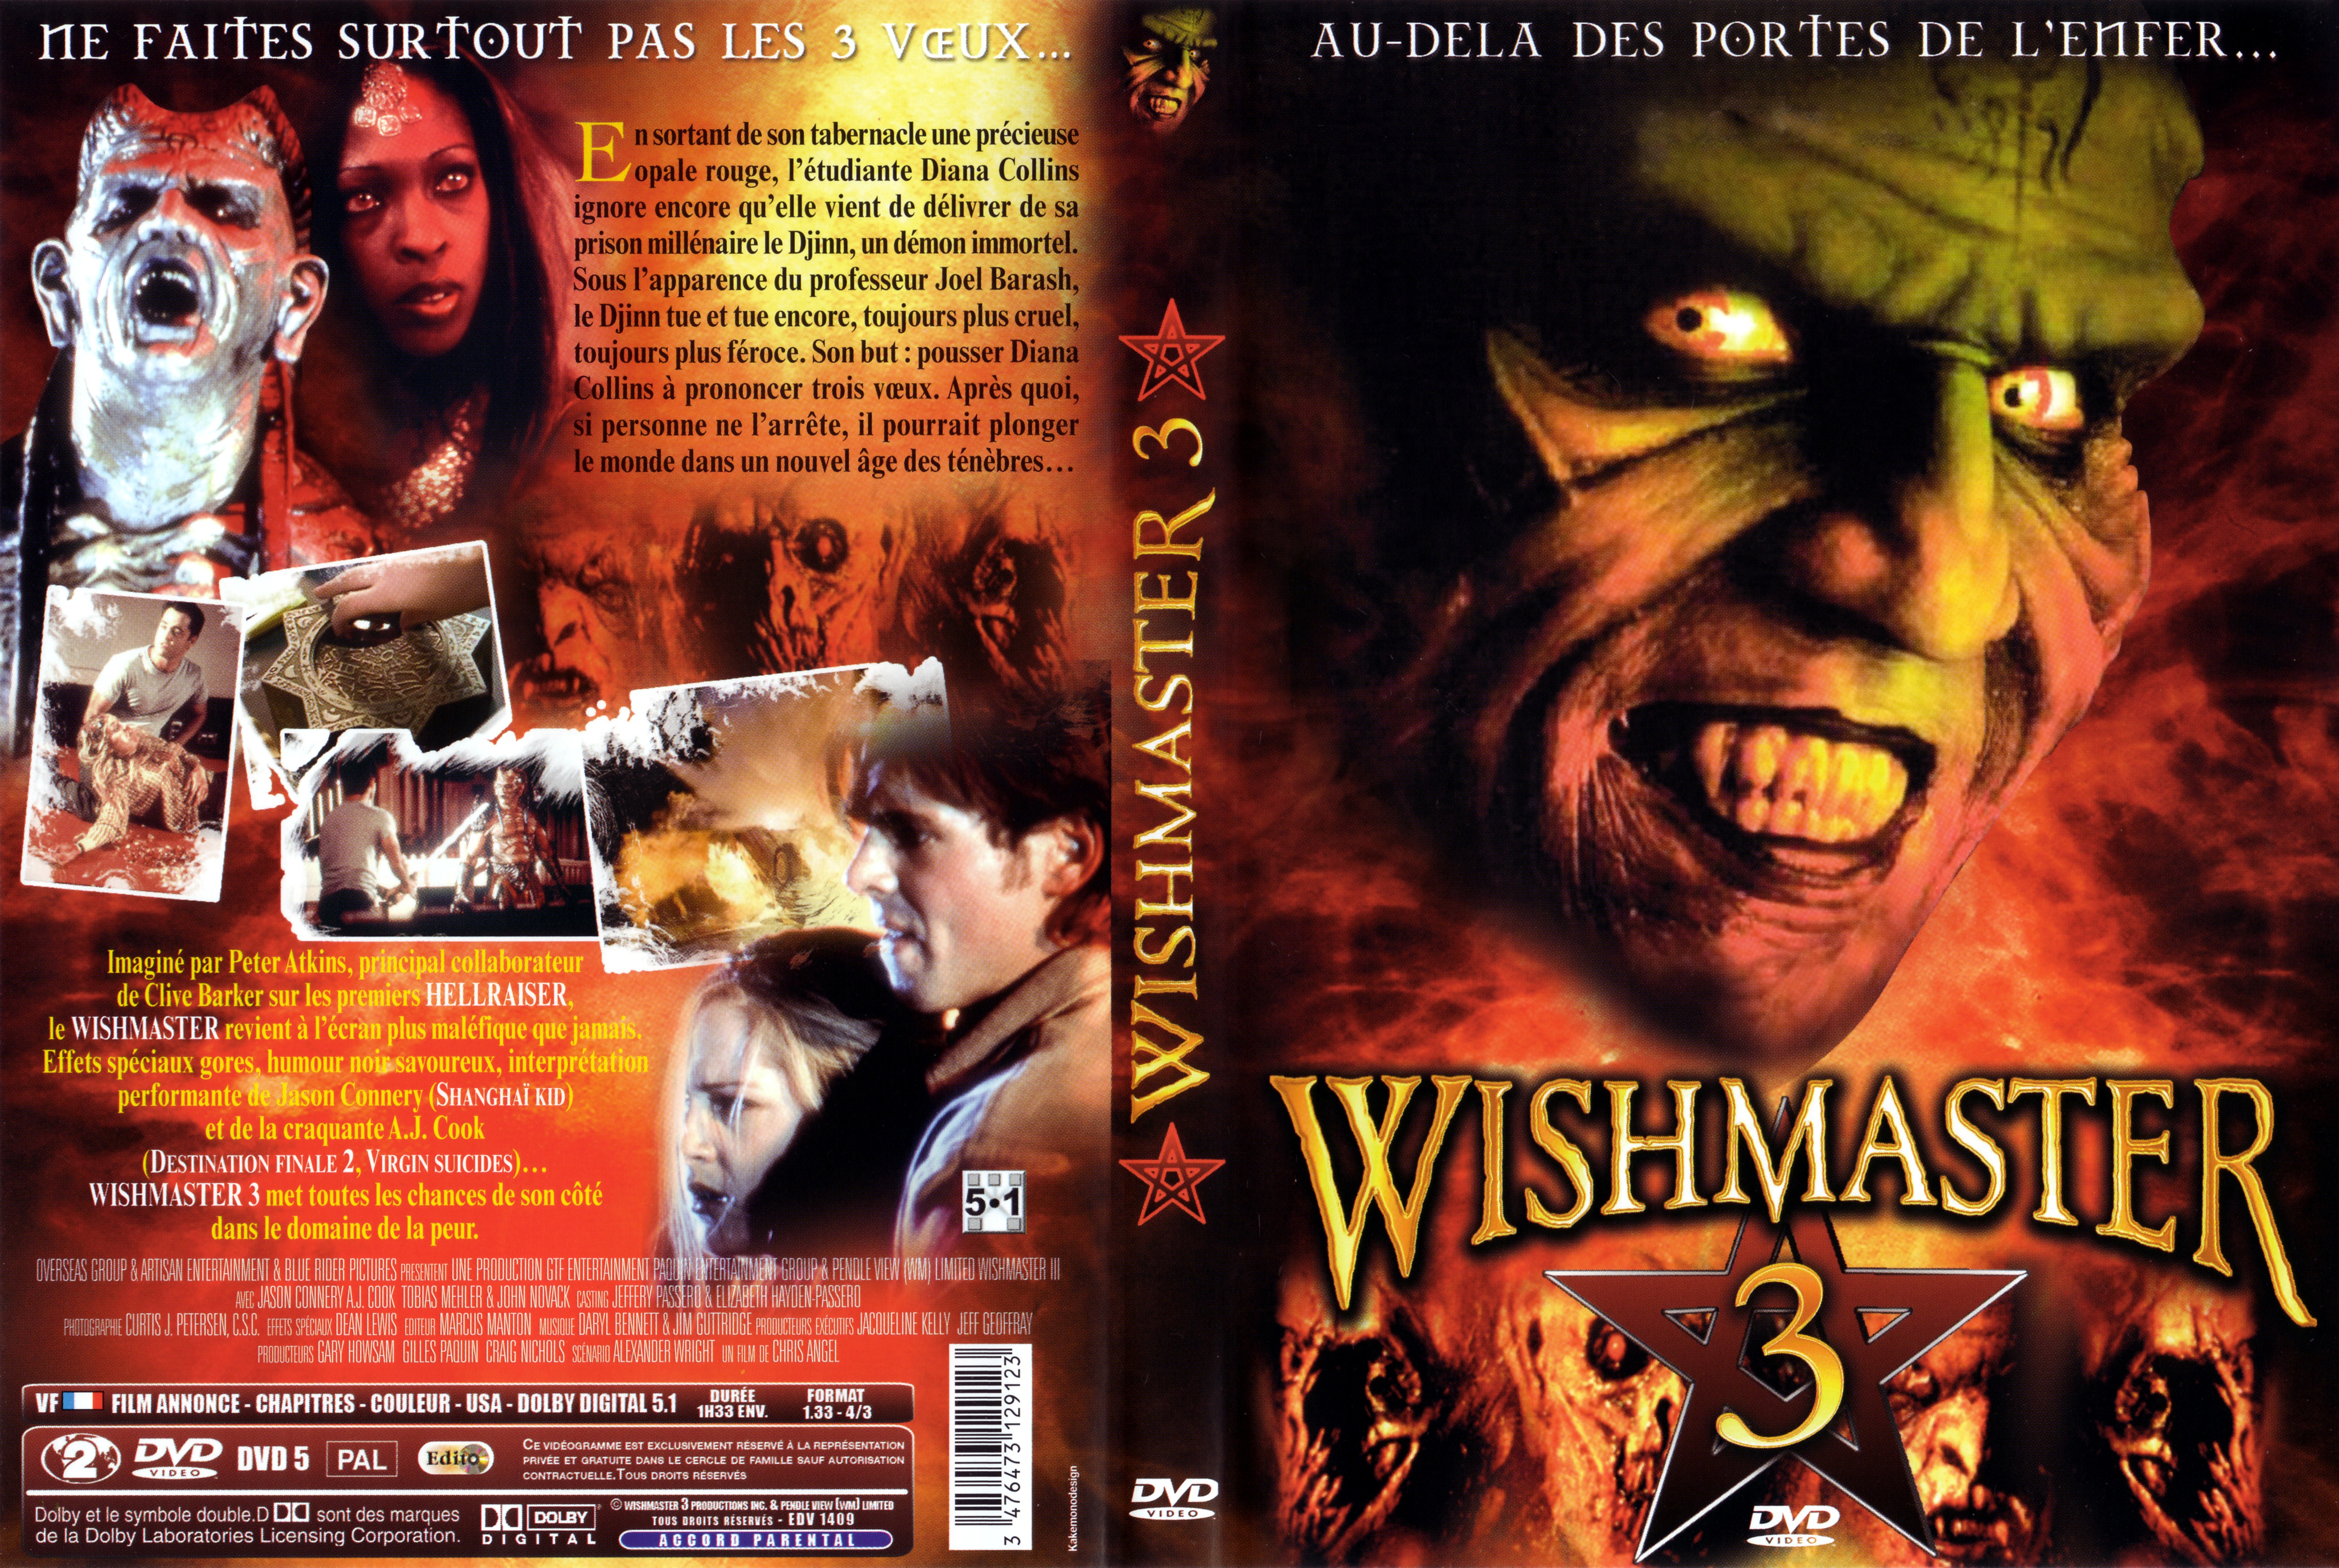 Jaquette DVD Wishmaster 3 v3